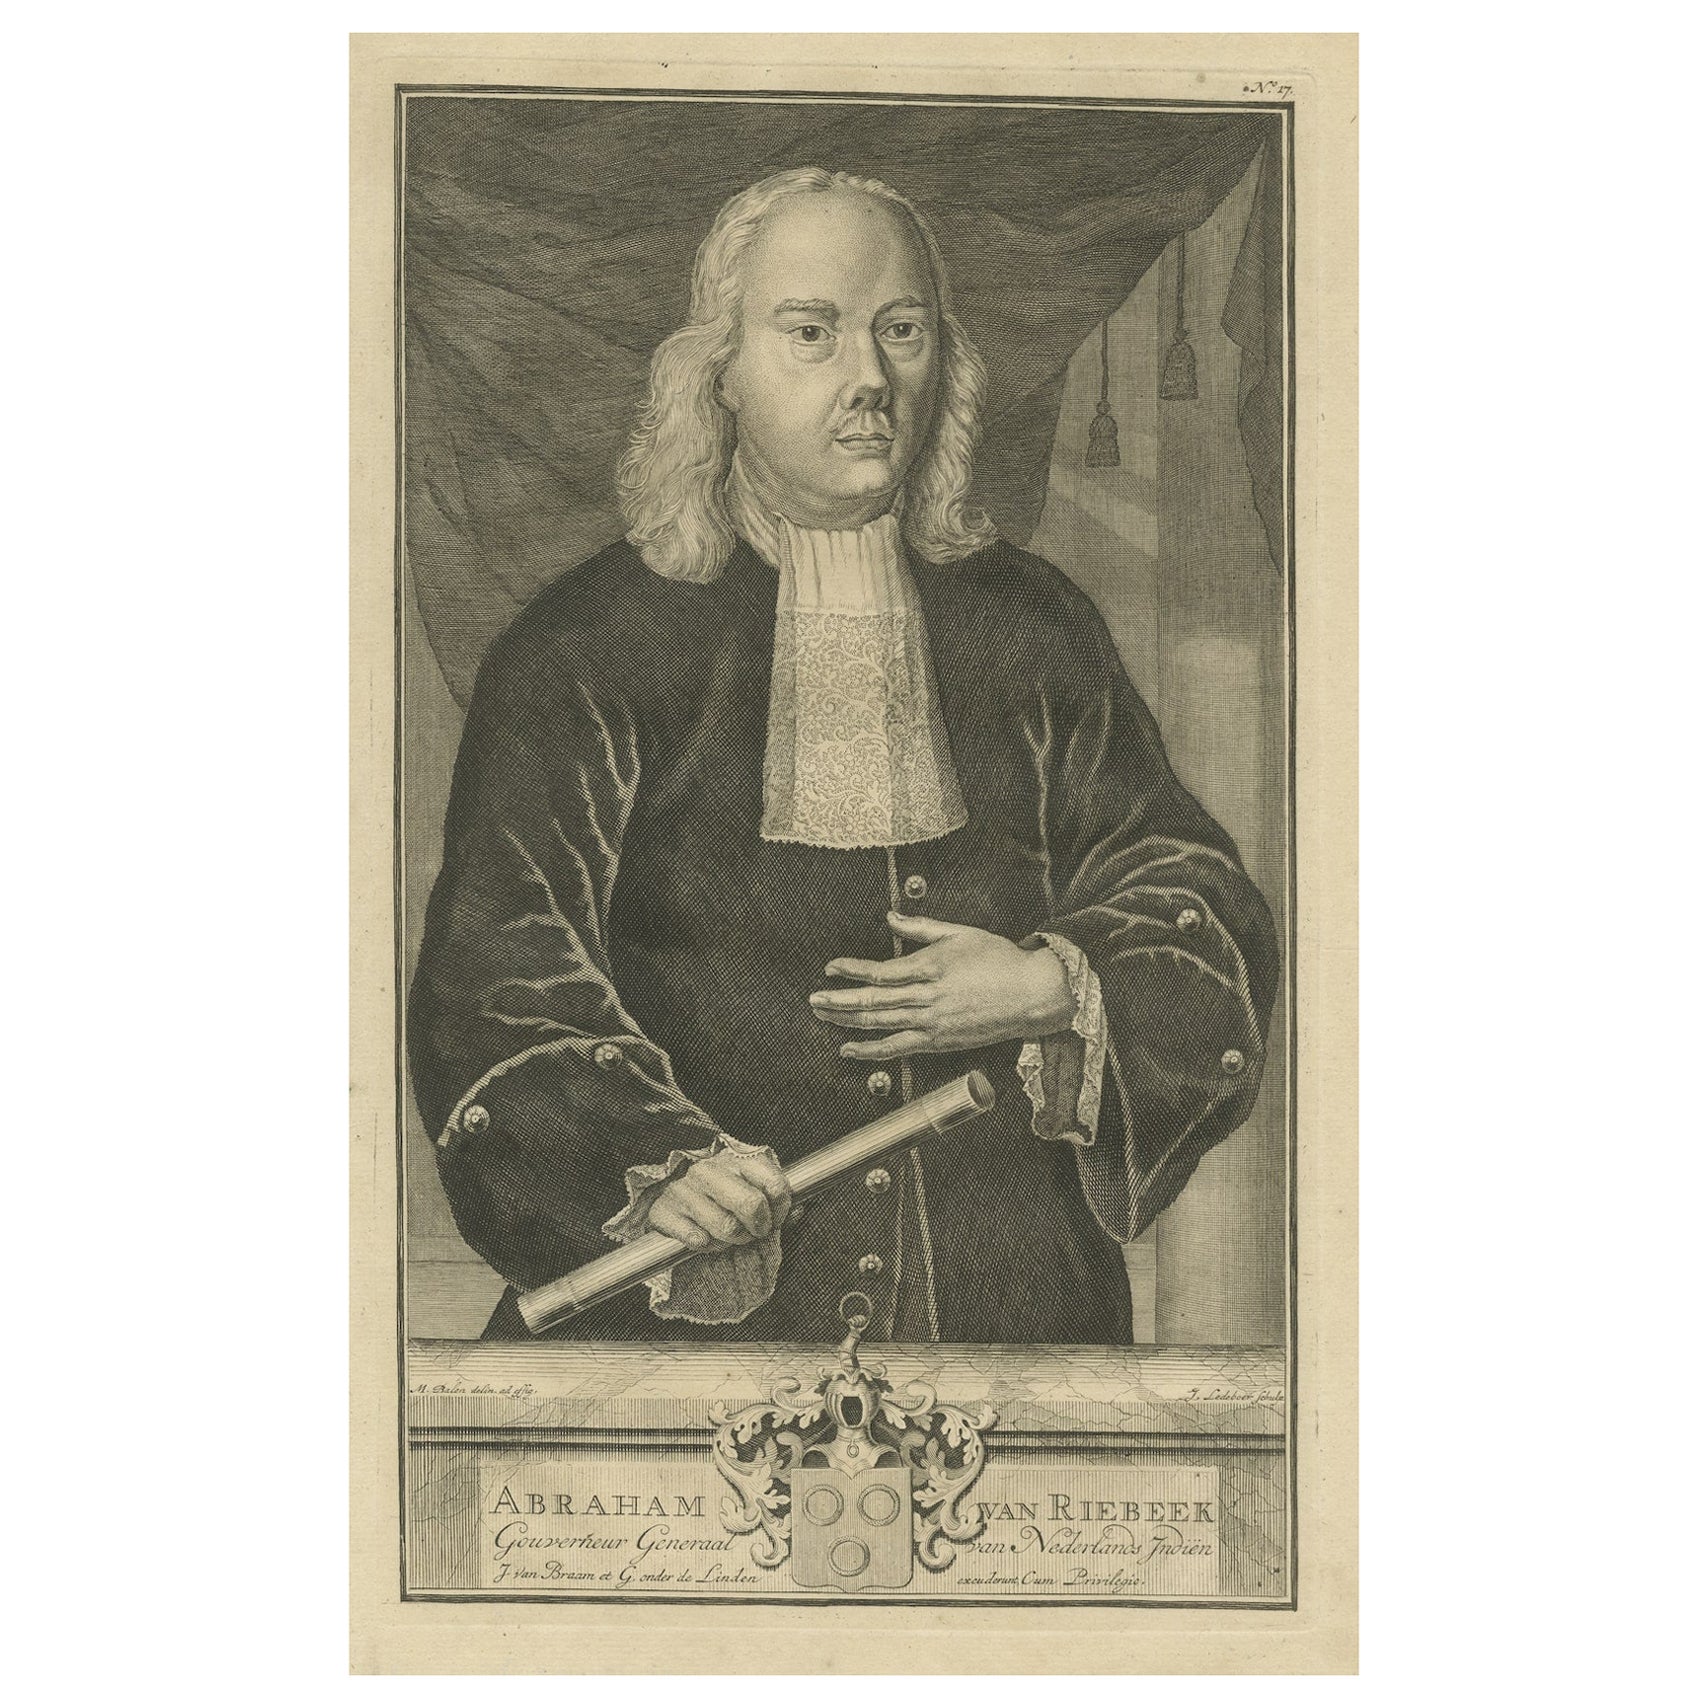 Abraham van Riebeeck: Illustrious Governor-General of the VOC, Dutch East Indies